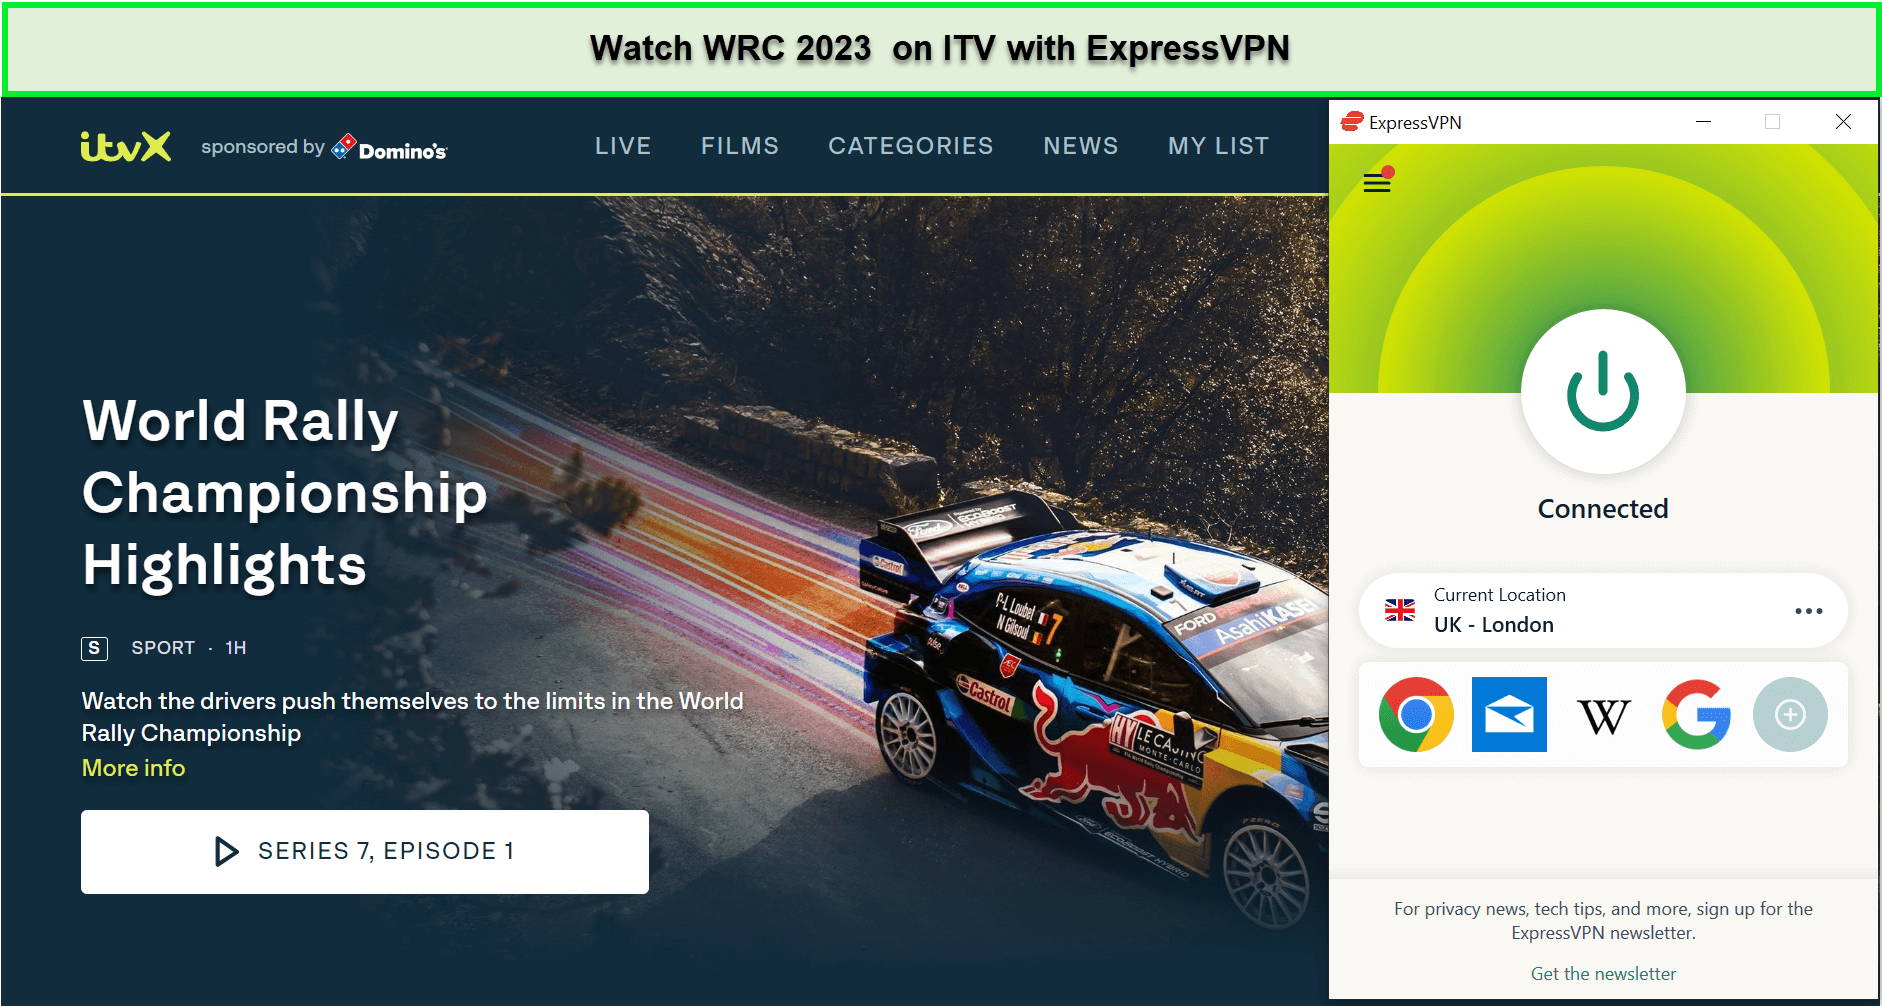 Watch-WRC-2023-outside-UK-on-ITV-with-ExpressVPN